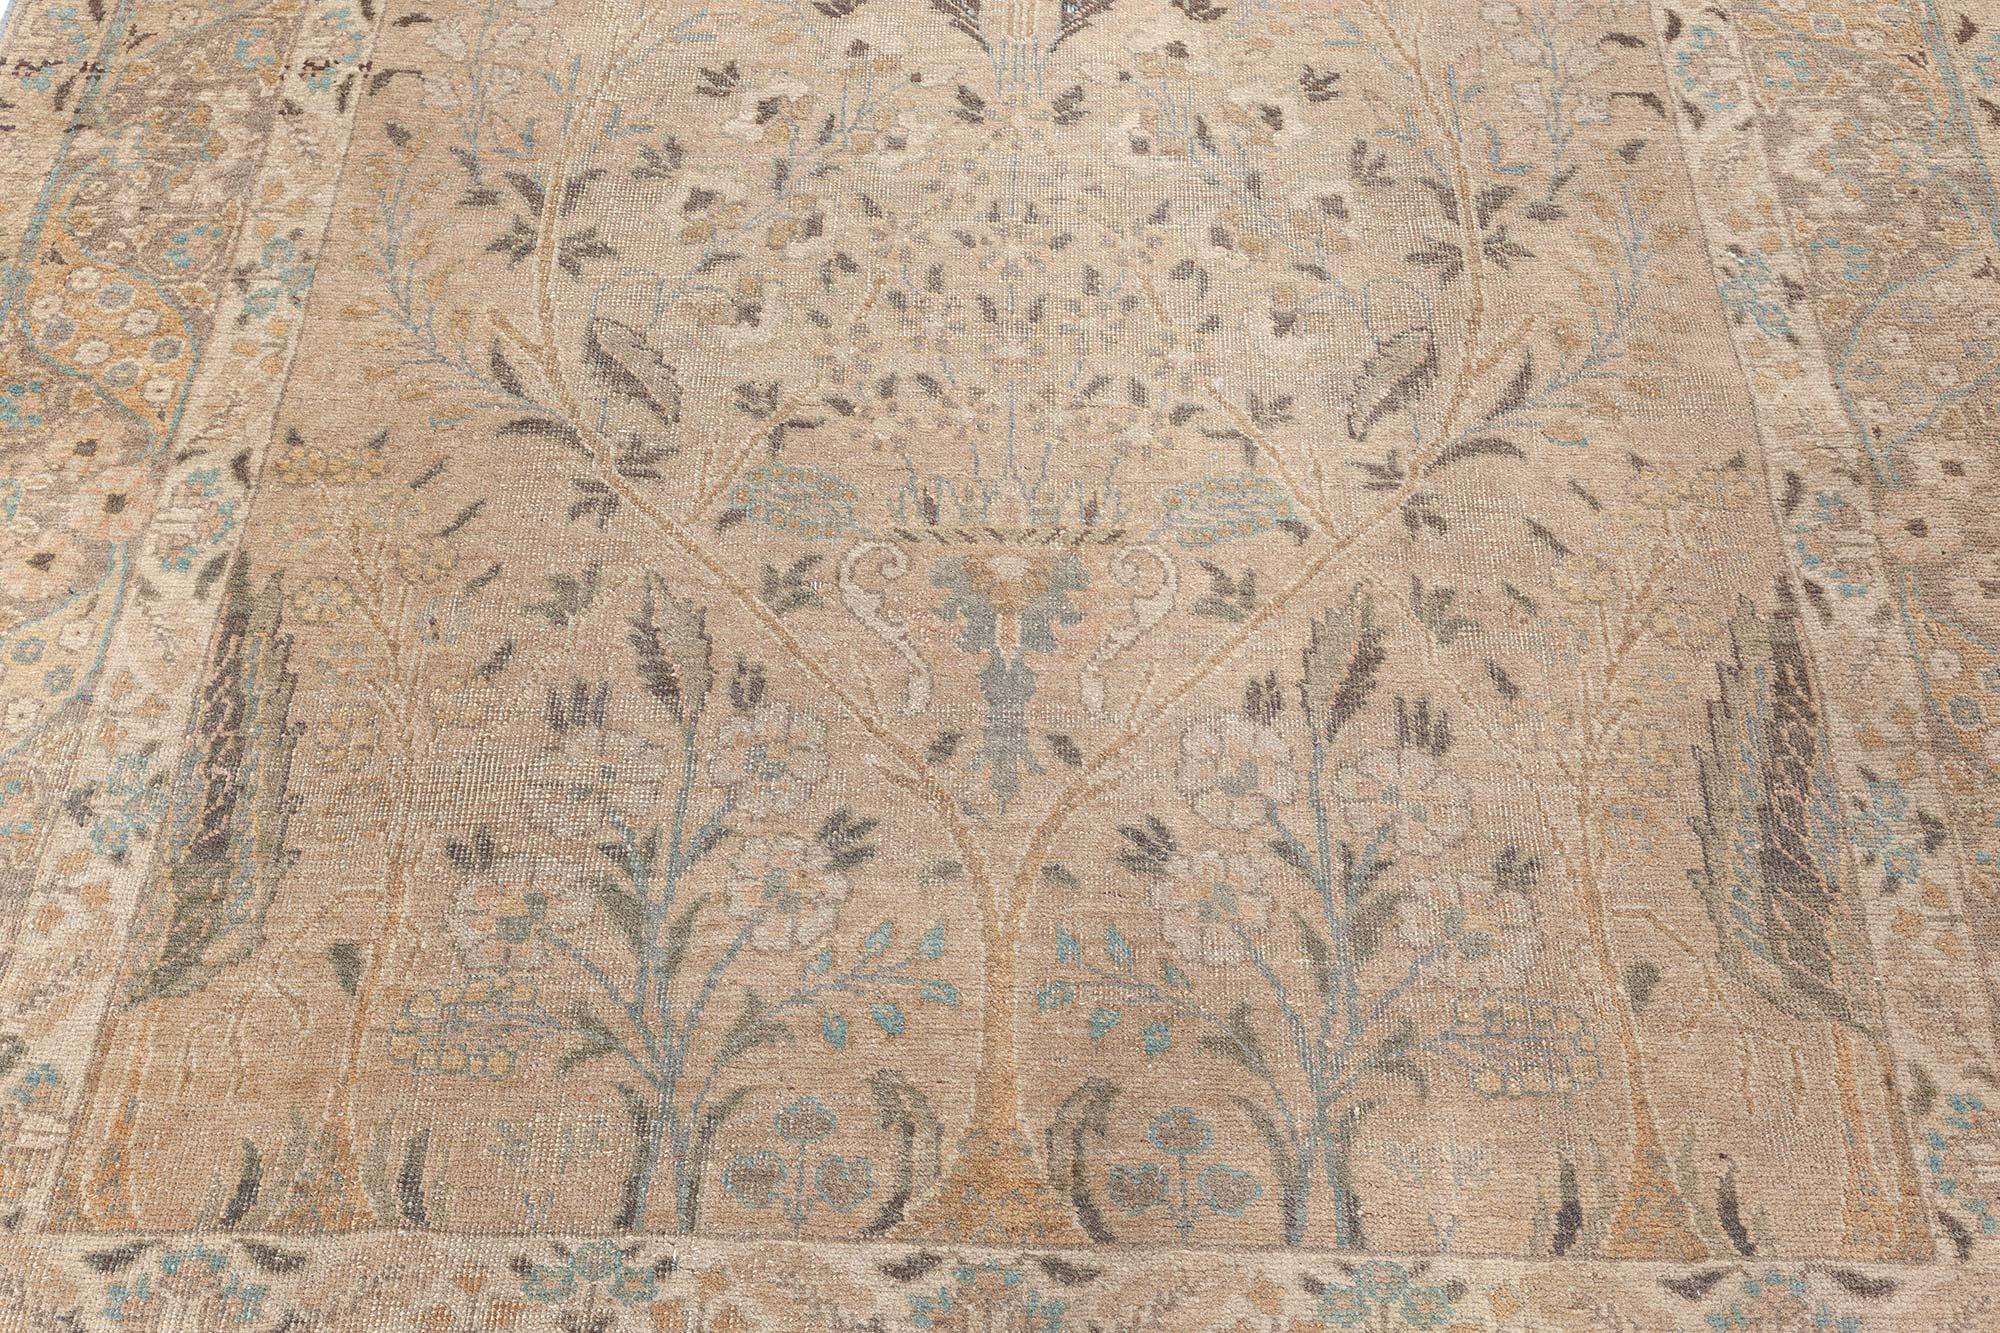 Early 20th Century Persian Tabriz handmade wool rug
Size: 4'5